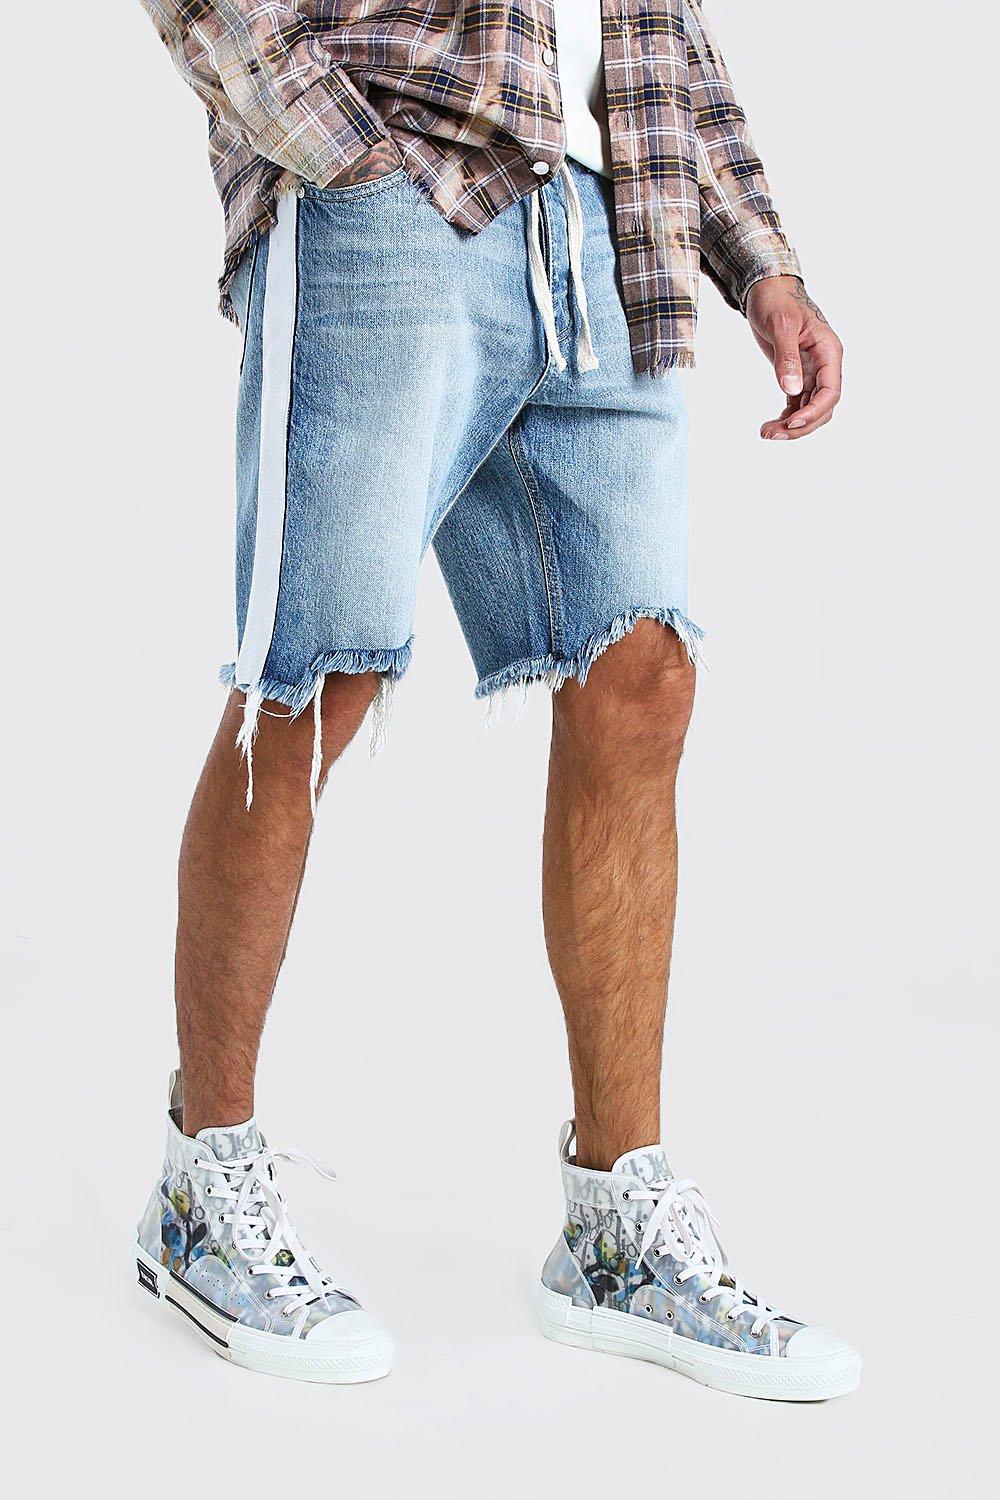 jean shorts loose